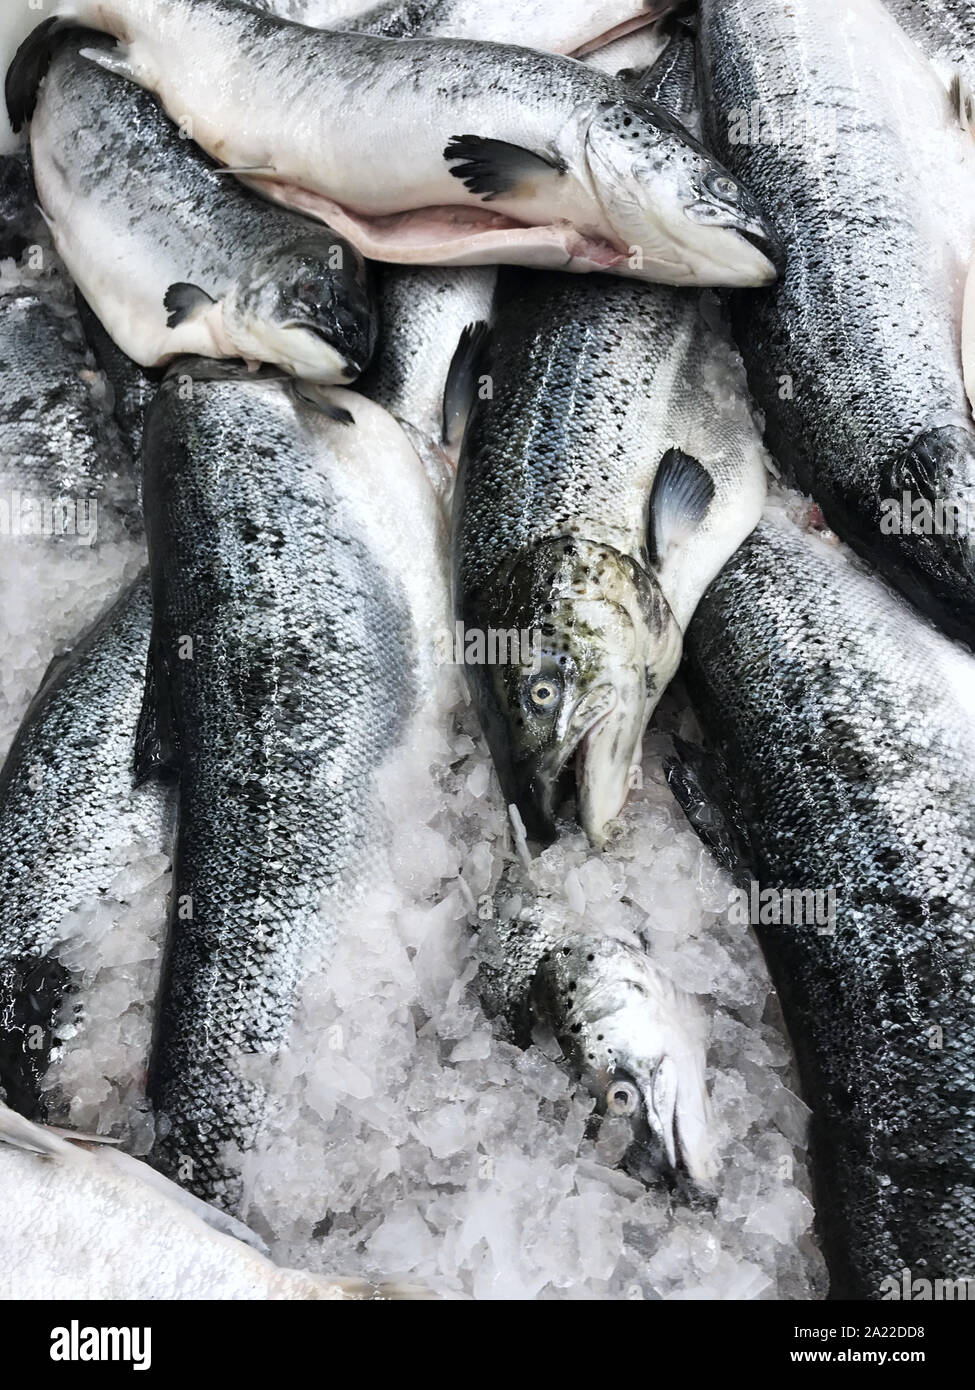 Fresh raw salmon fish over crushed ice. Stock Photo